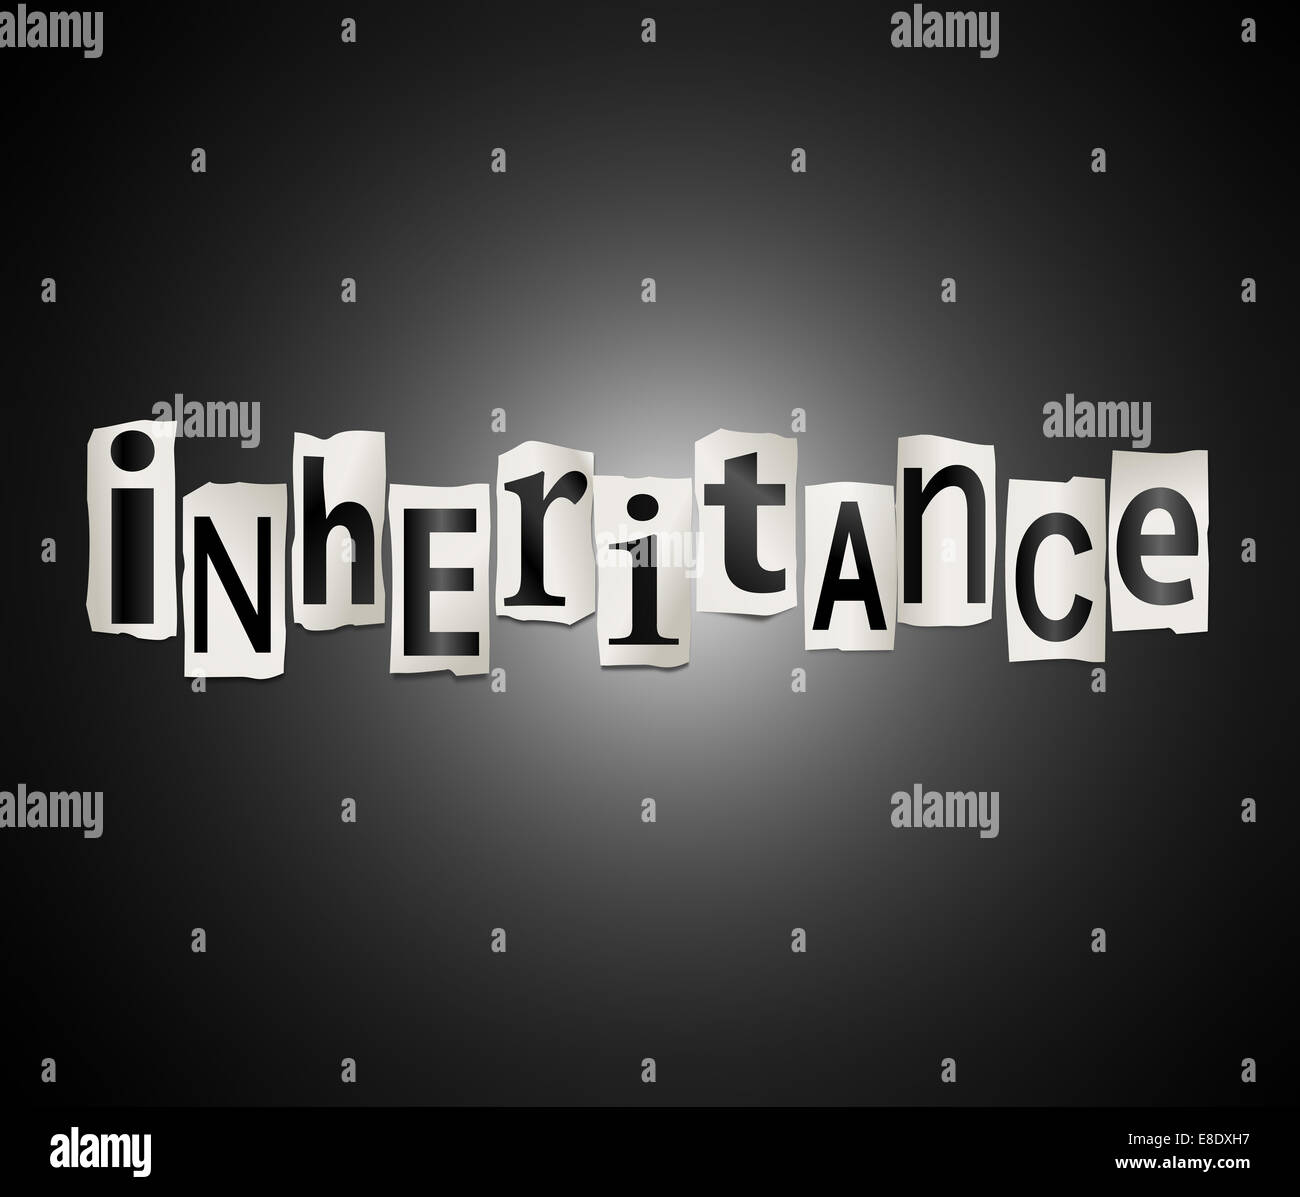 Inheritance. Stock Photo